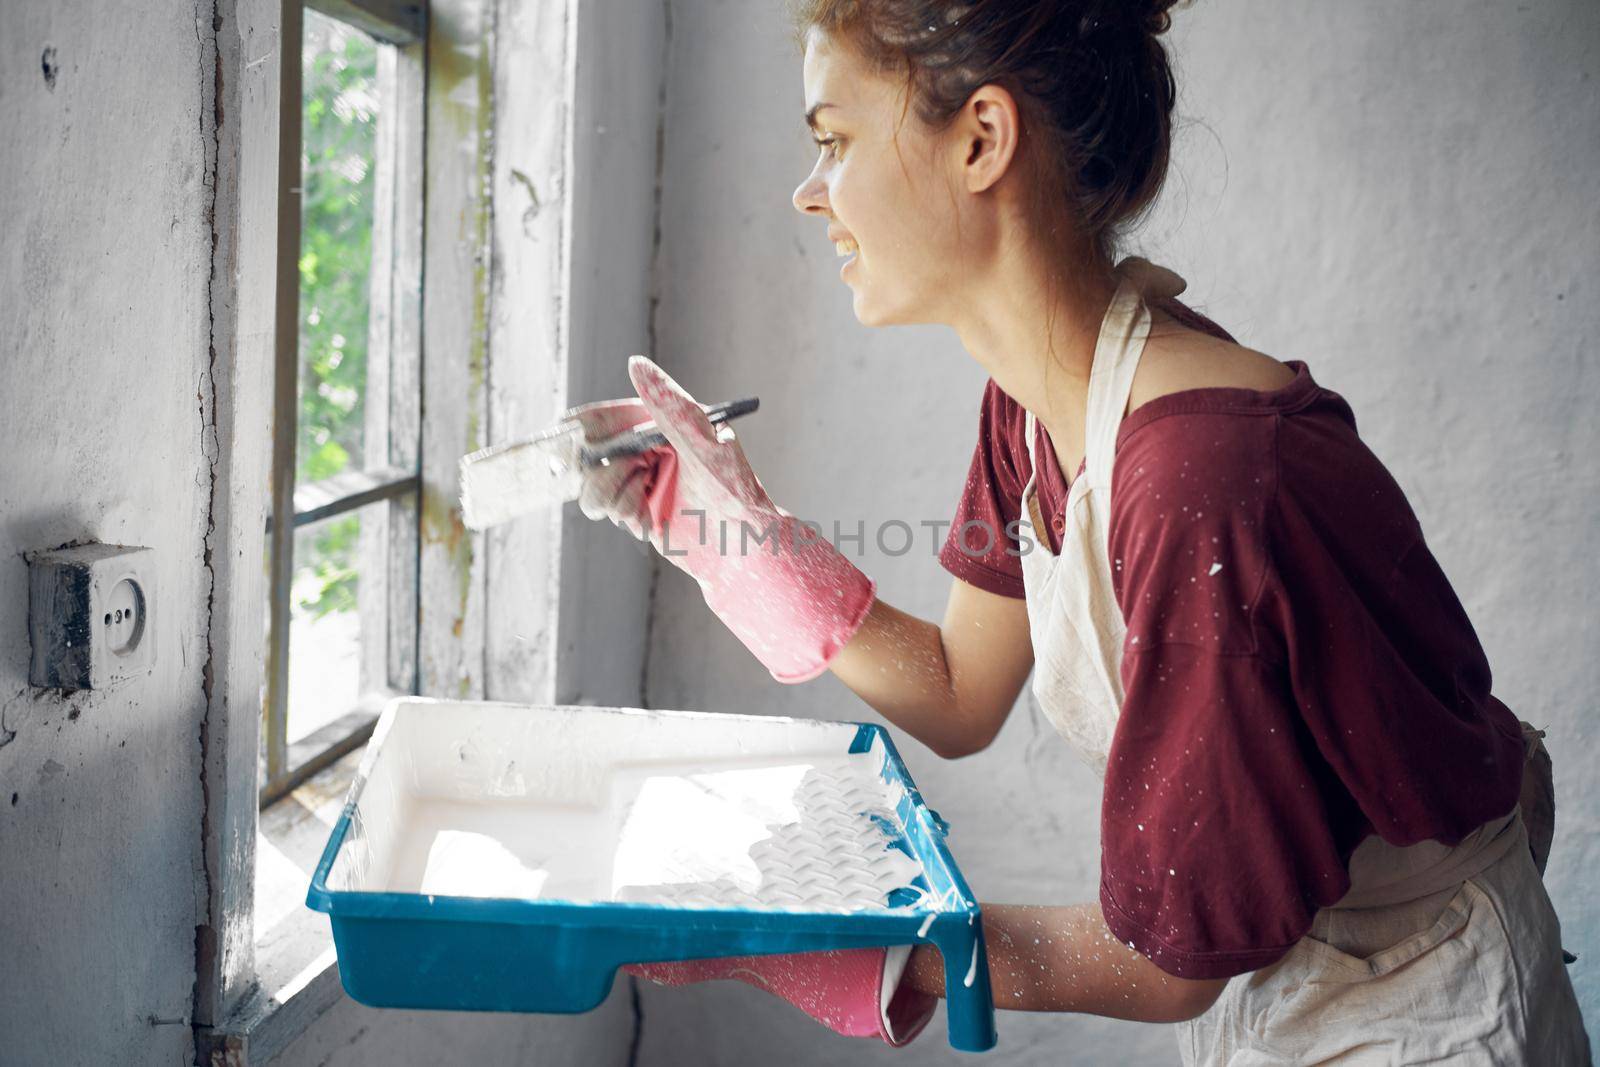 woman painter makes home repairs near window interior by Vichizh